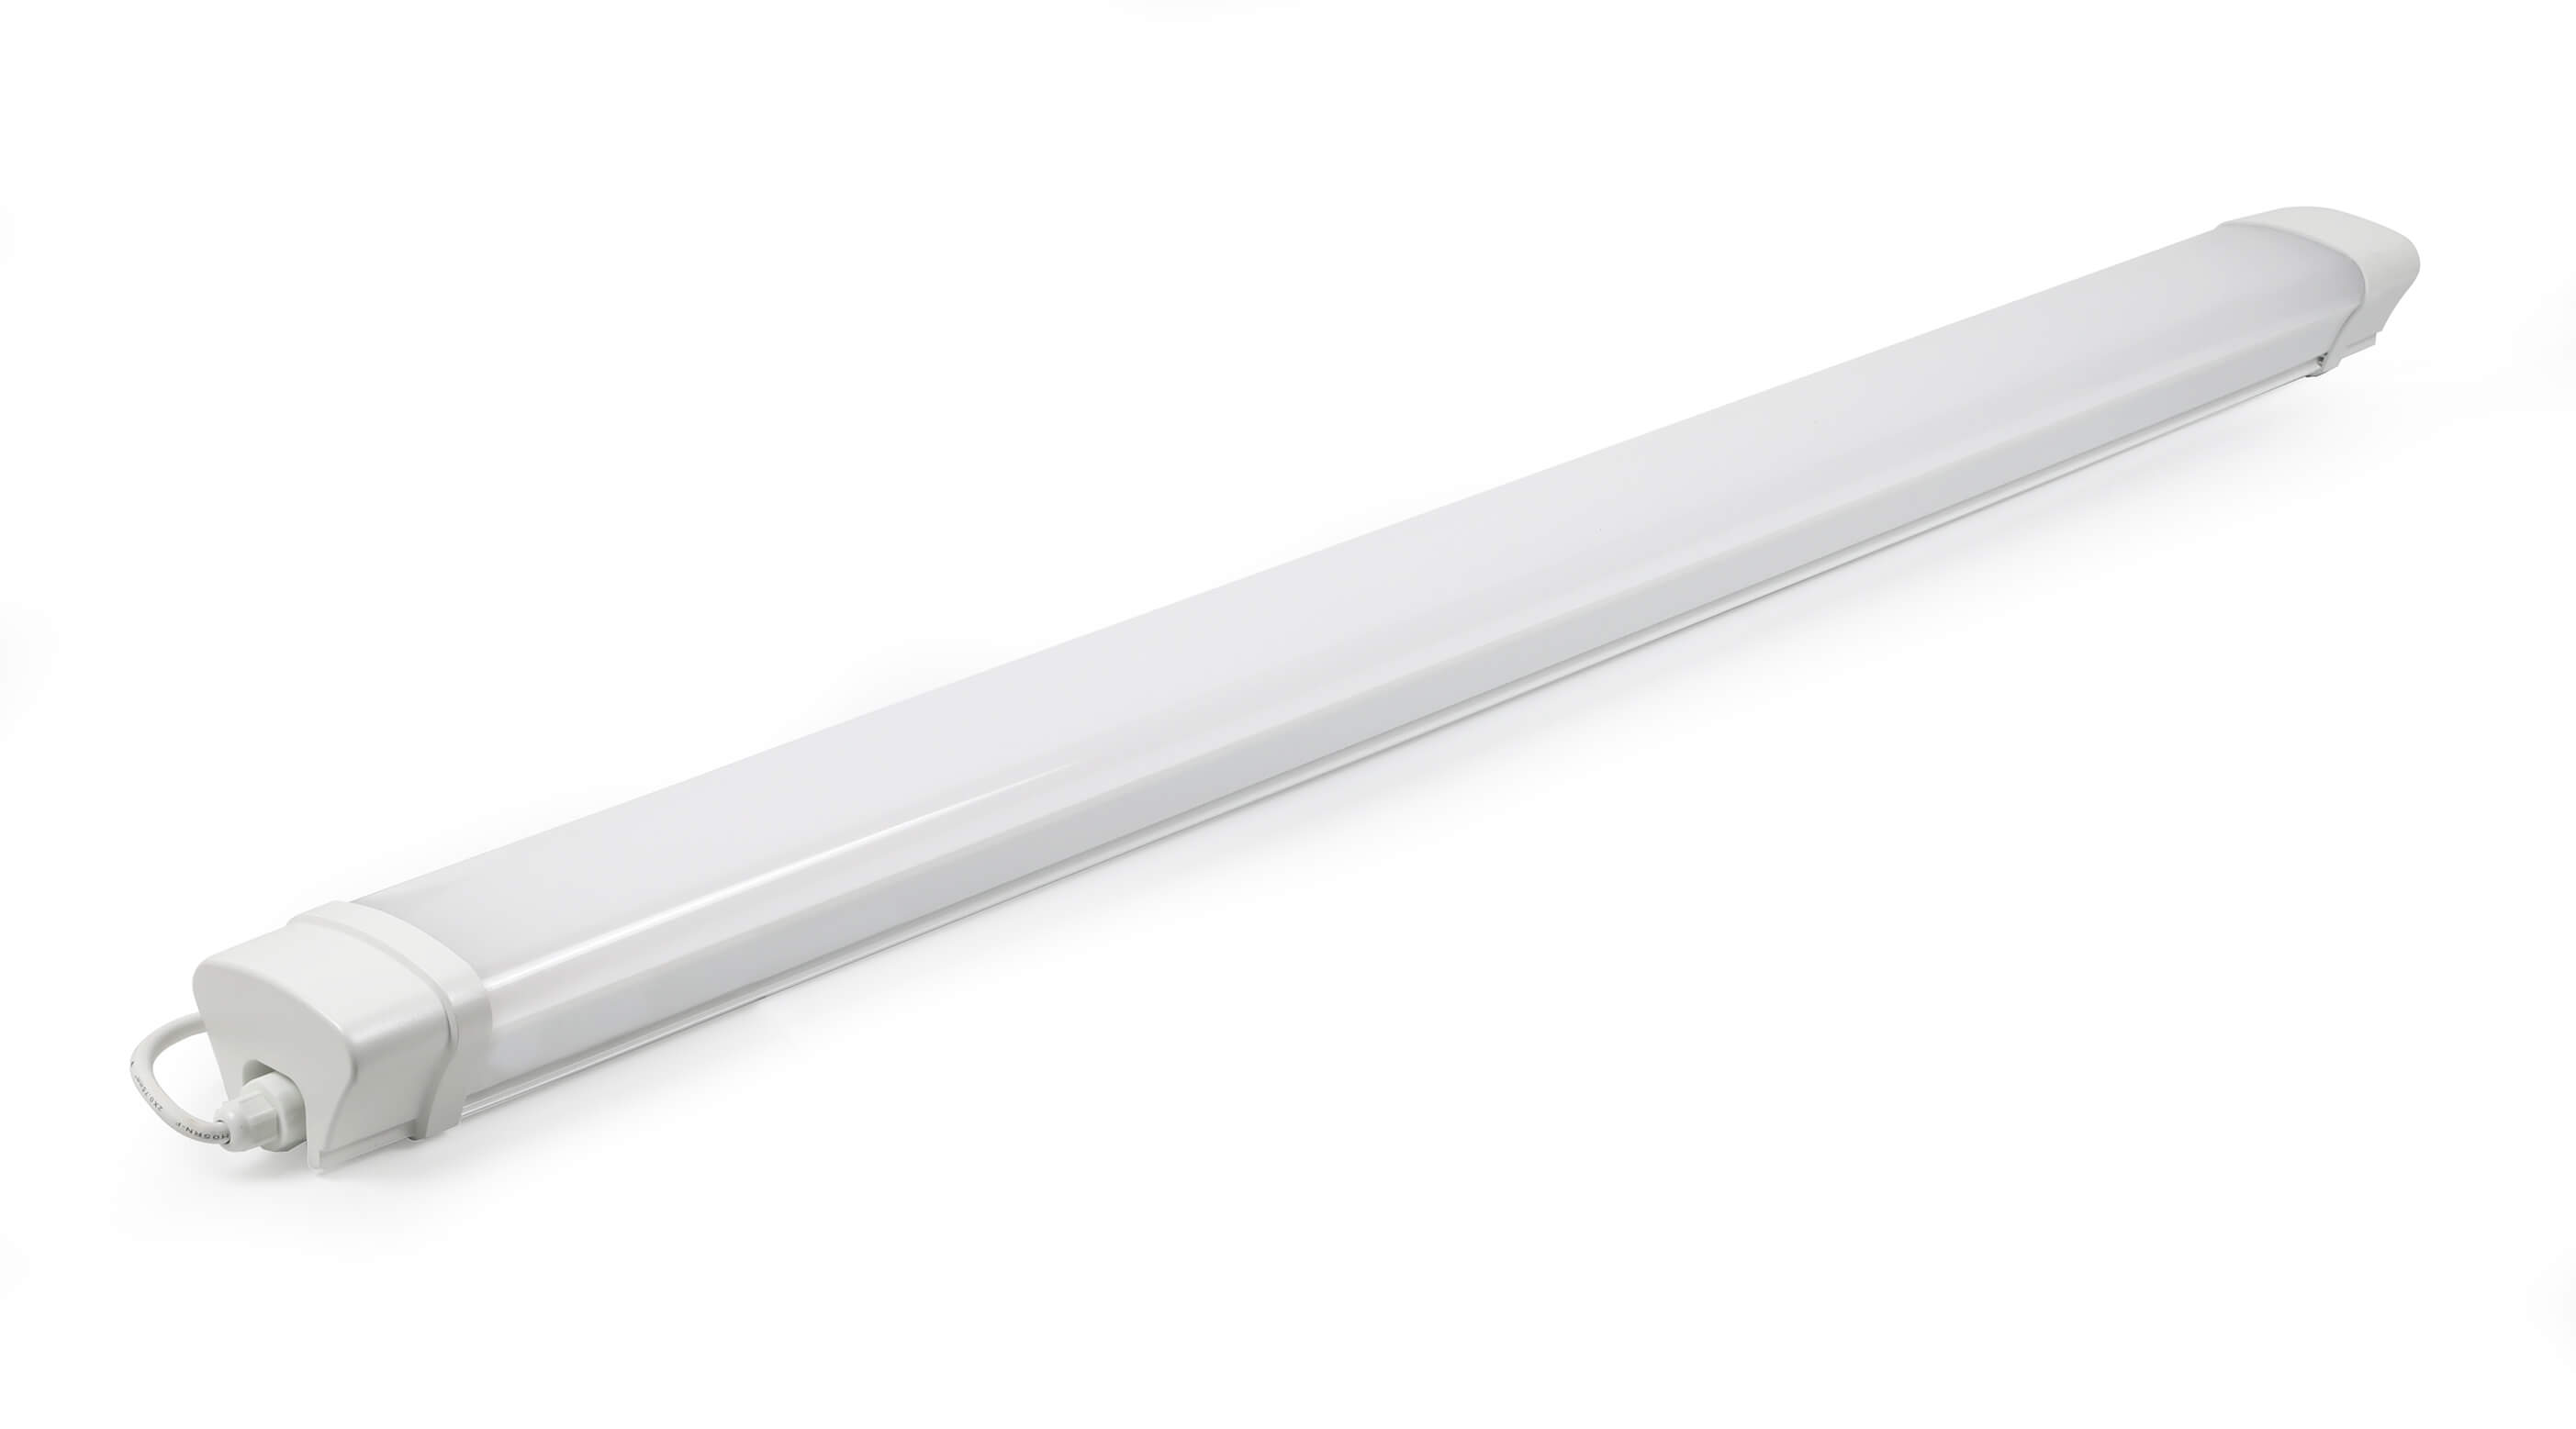 LHT056 Waterproof LED Linea luminaire